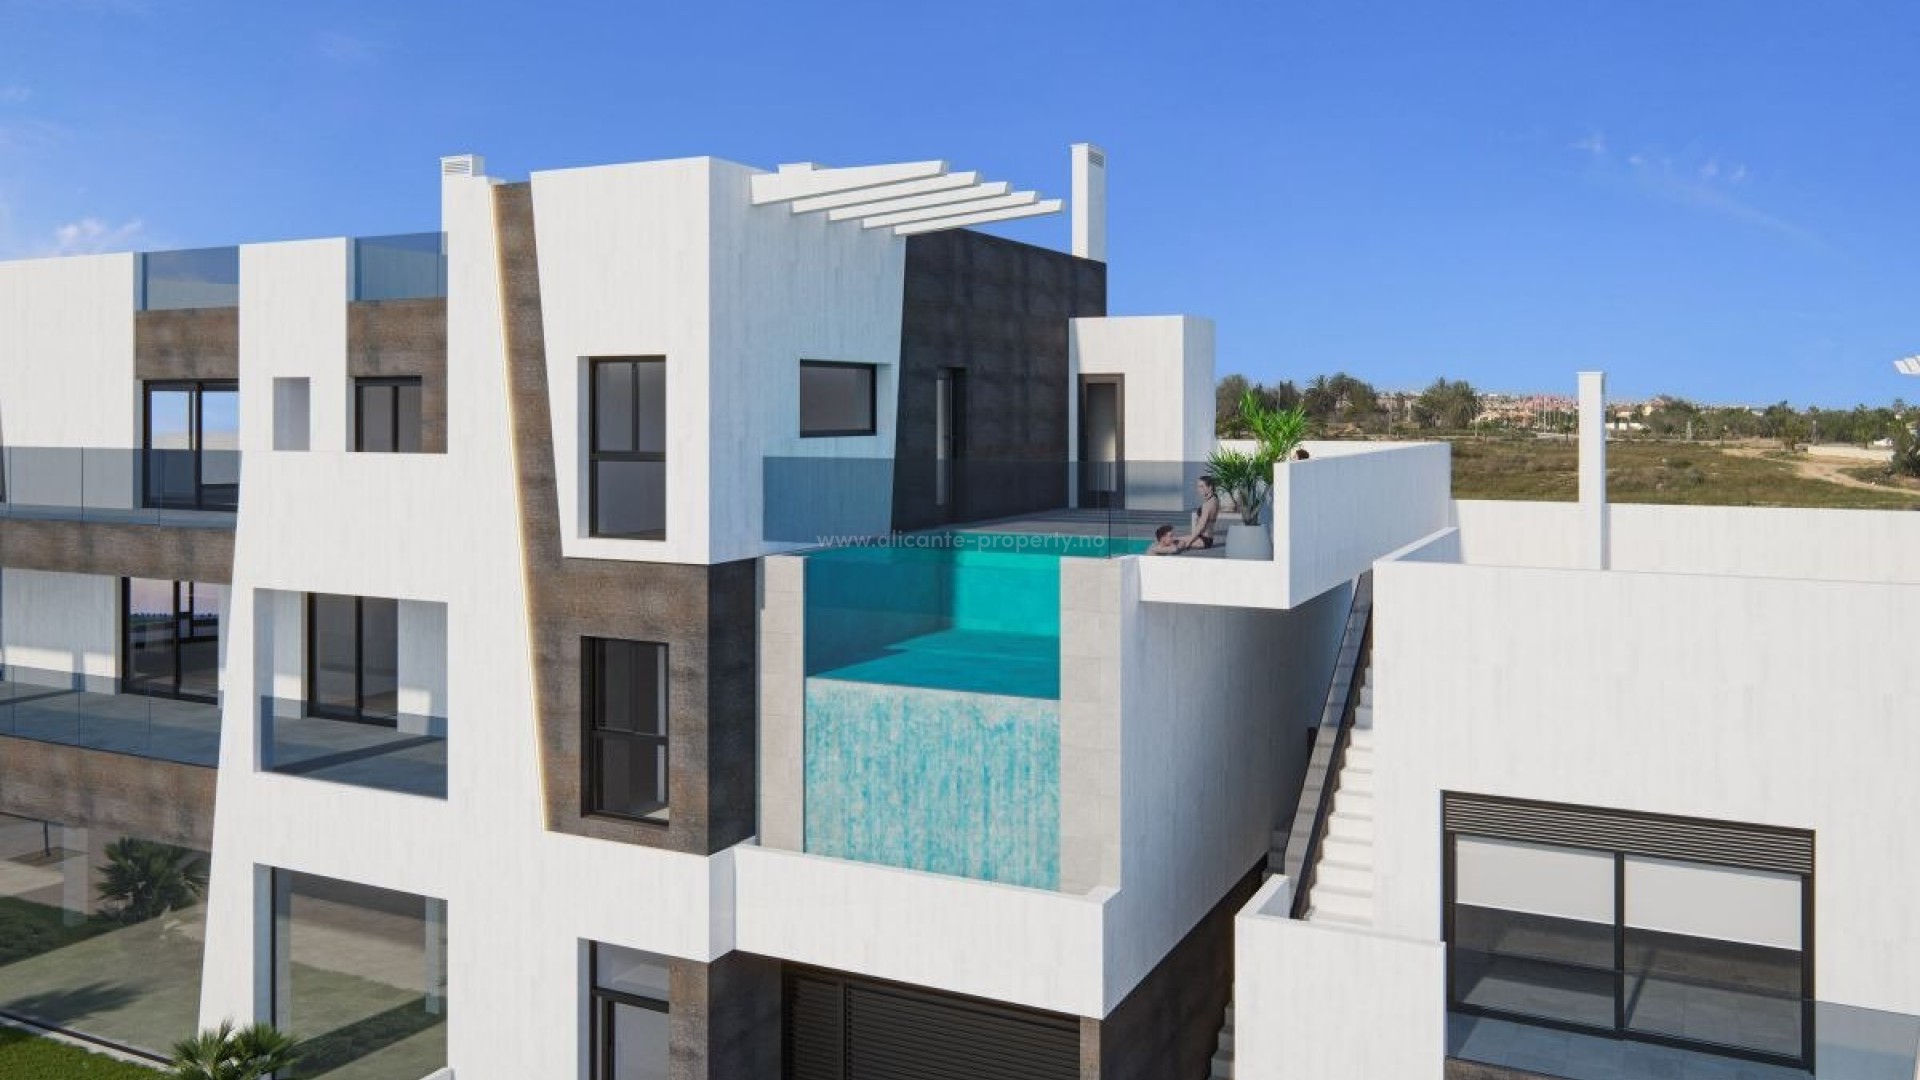 8 bungalows - apartments in Pilar de La Horadada, rooftop pool, 2/3 bedrooms, 2 bathrooms, large garden or solarium, close to beautiful beaches